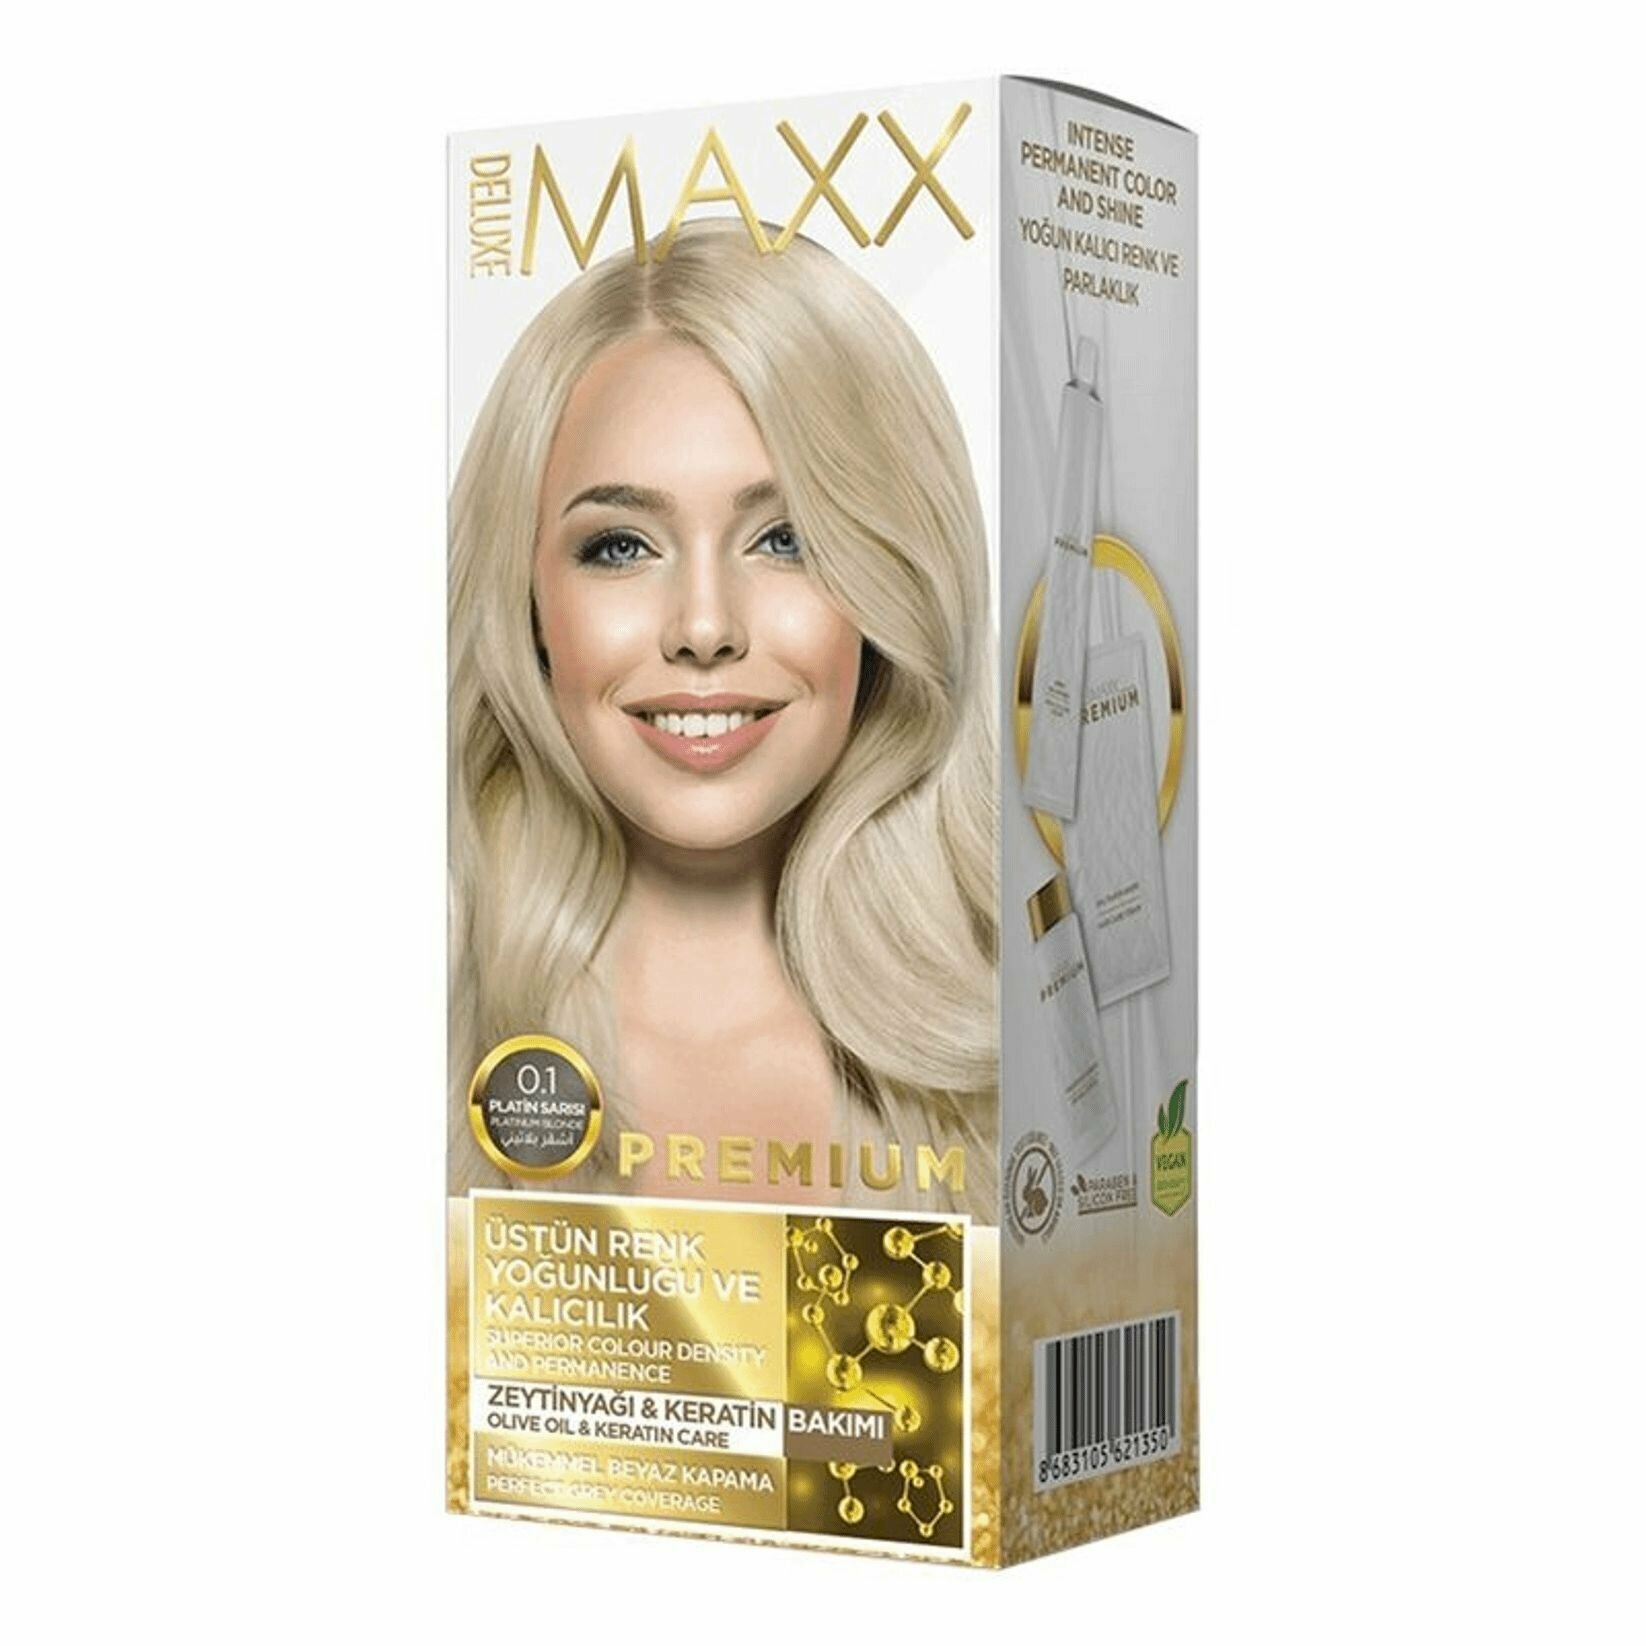 MAXX DELUXE Краска для волос Premium, тон 0.1 Платиновый блондин, 110 г